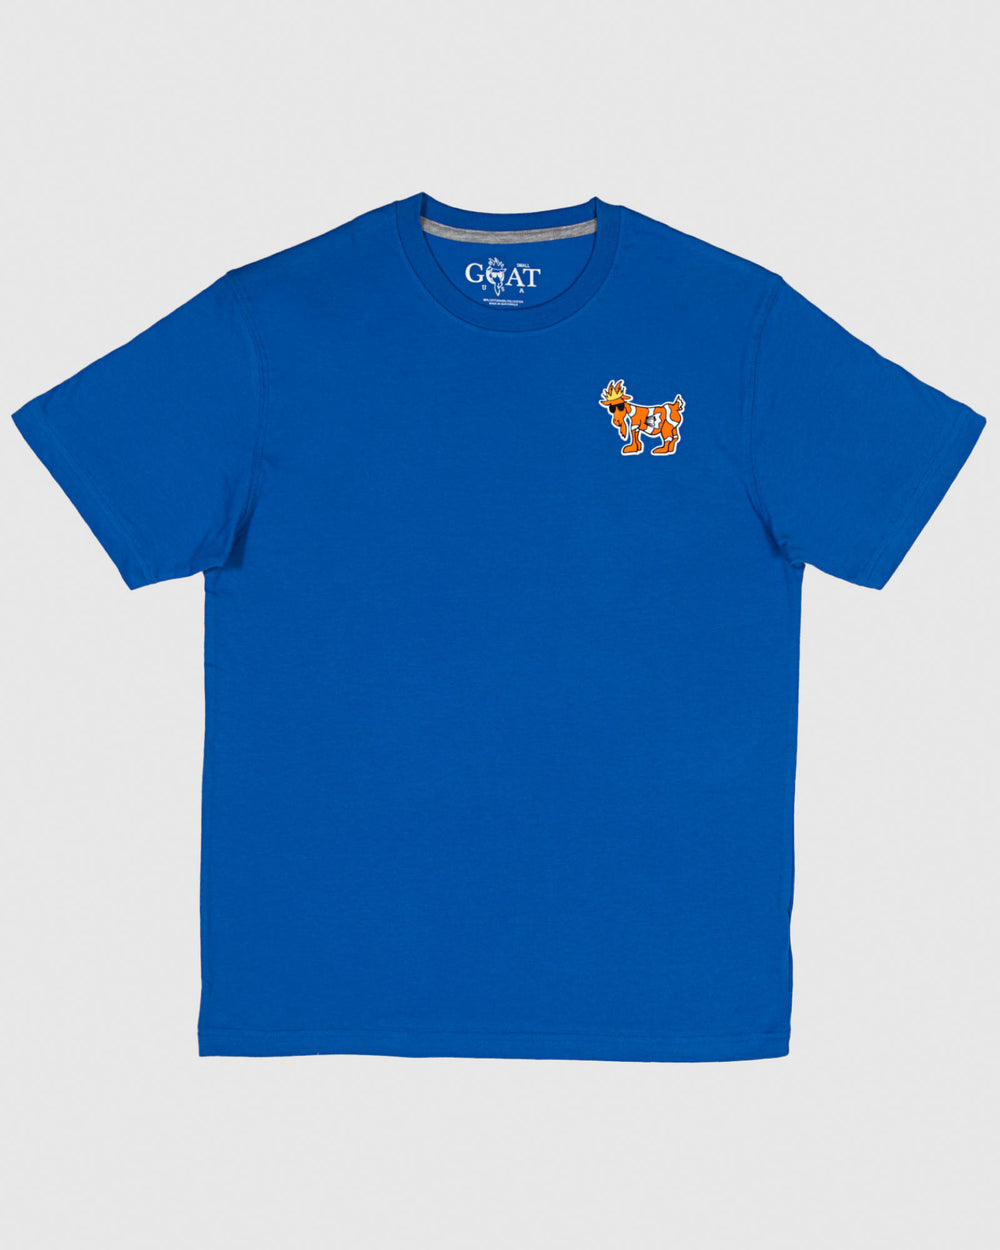 Royal t-shirt with clownfish design